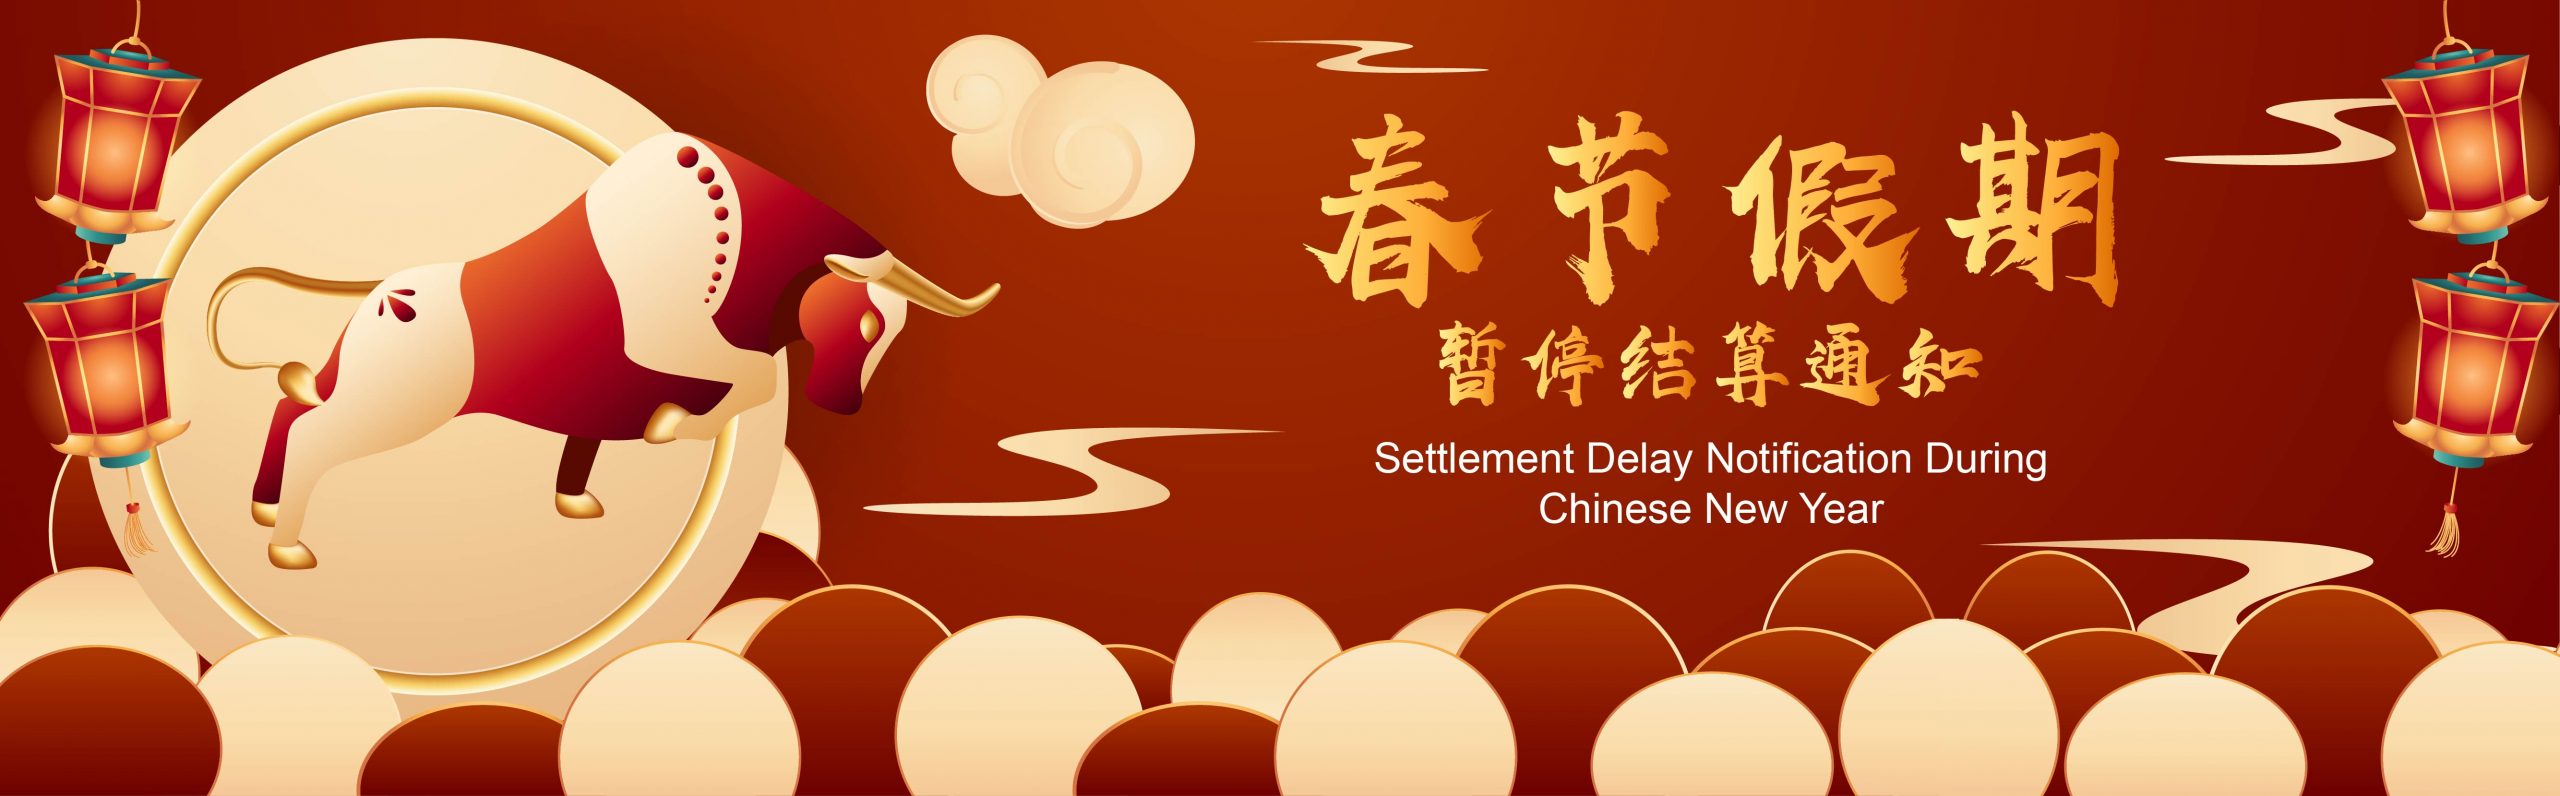 Settlement Delay Notification During Spring Festival in China 关于2021年中国春节假期暂停结算的通知